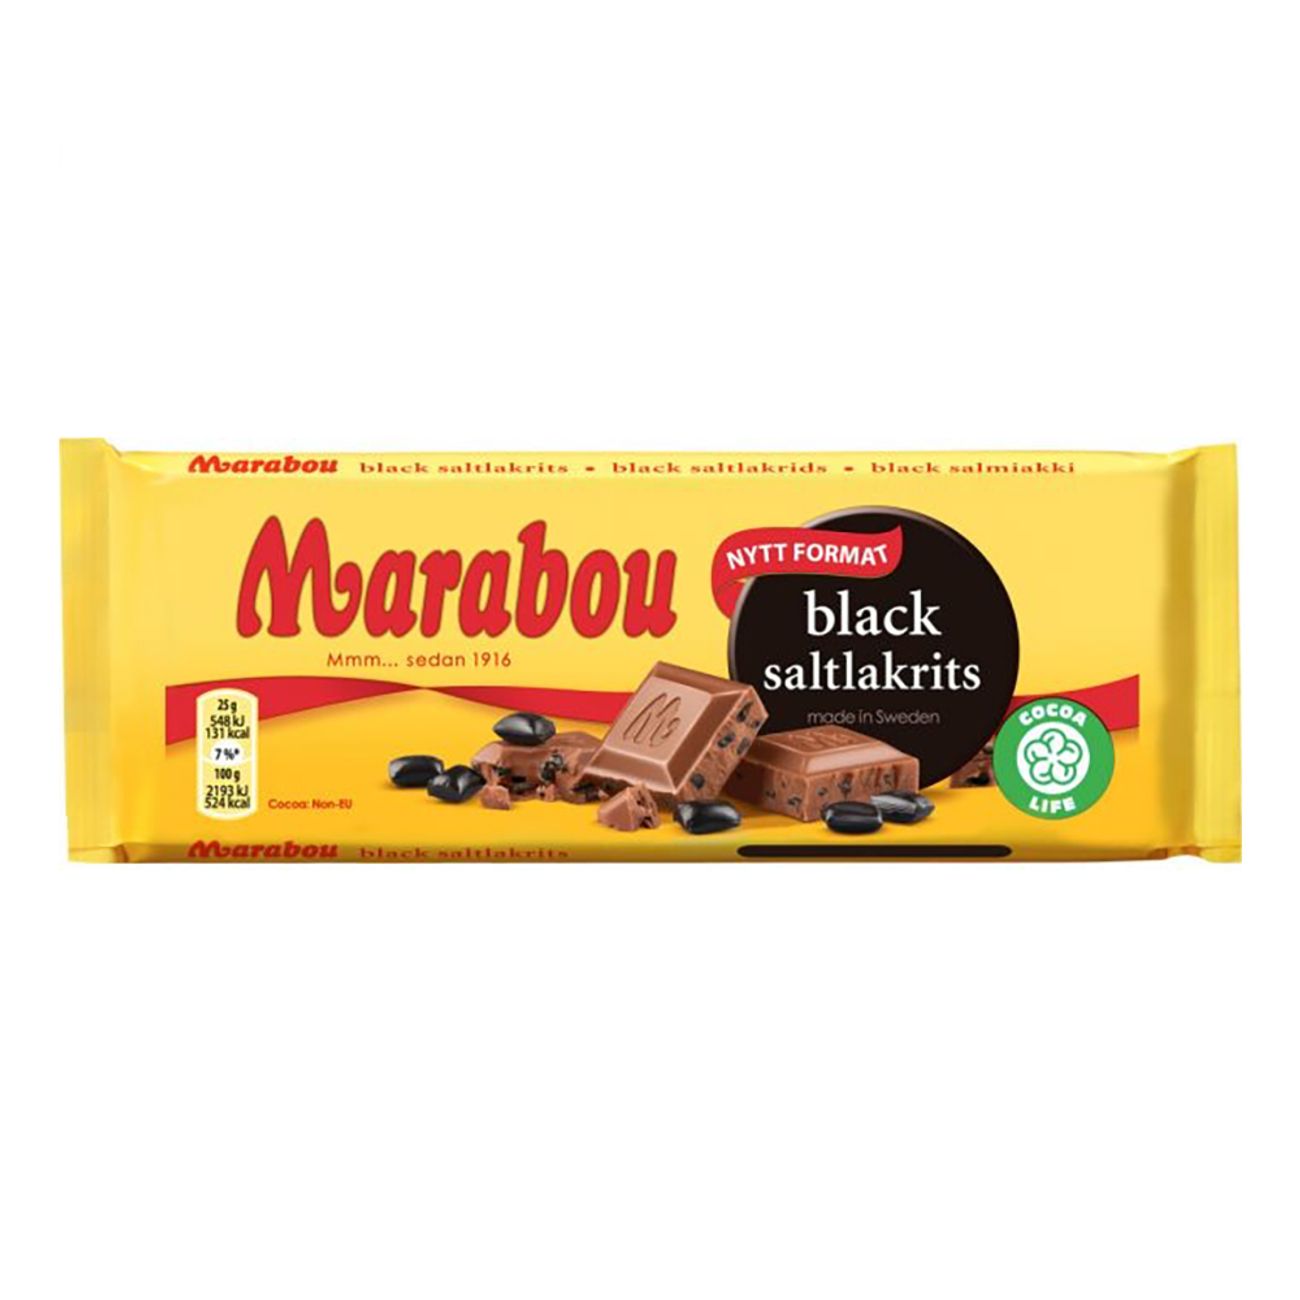 marabou-black-saltlakrits-74058-2